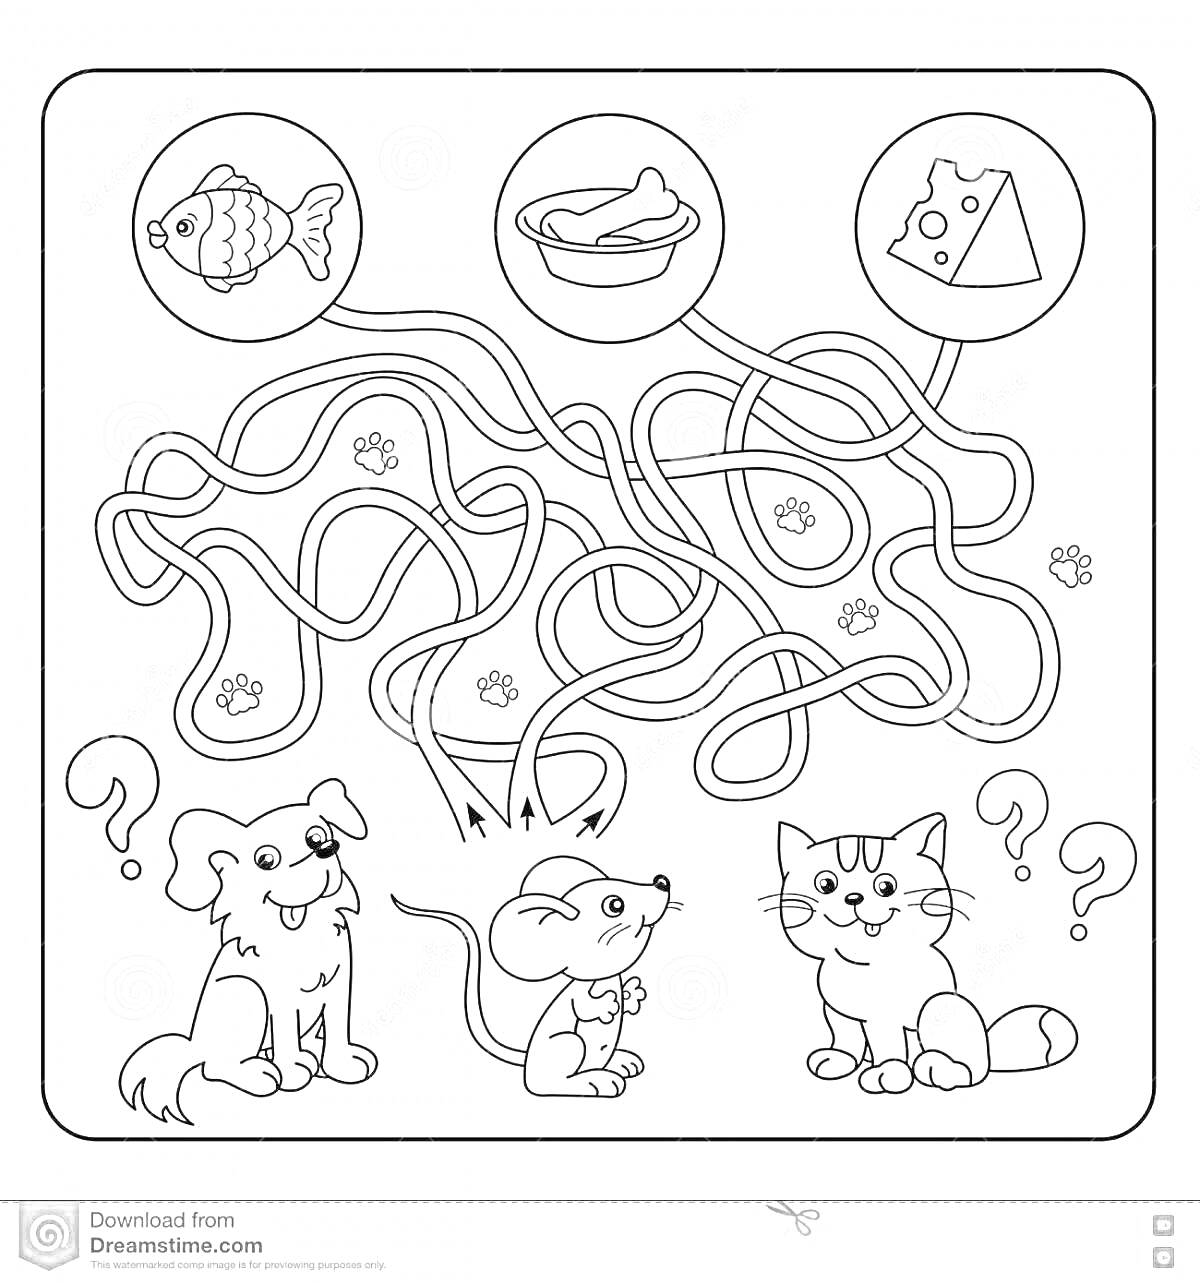 На раскраске изображено: Лабиринт, Собака, Мышь, Рыба, Сыр, Еда для животных, Игра, Пазл